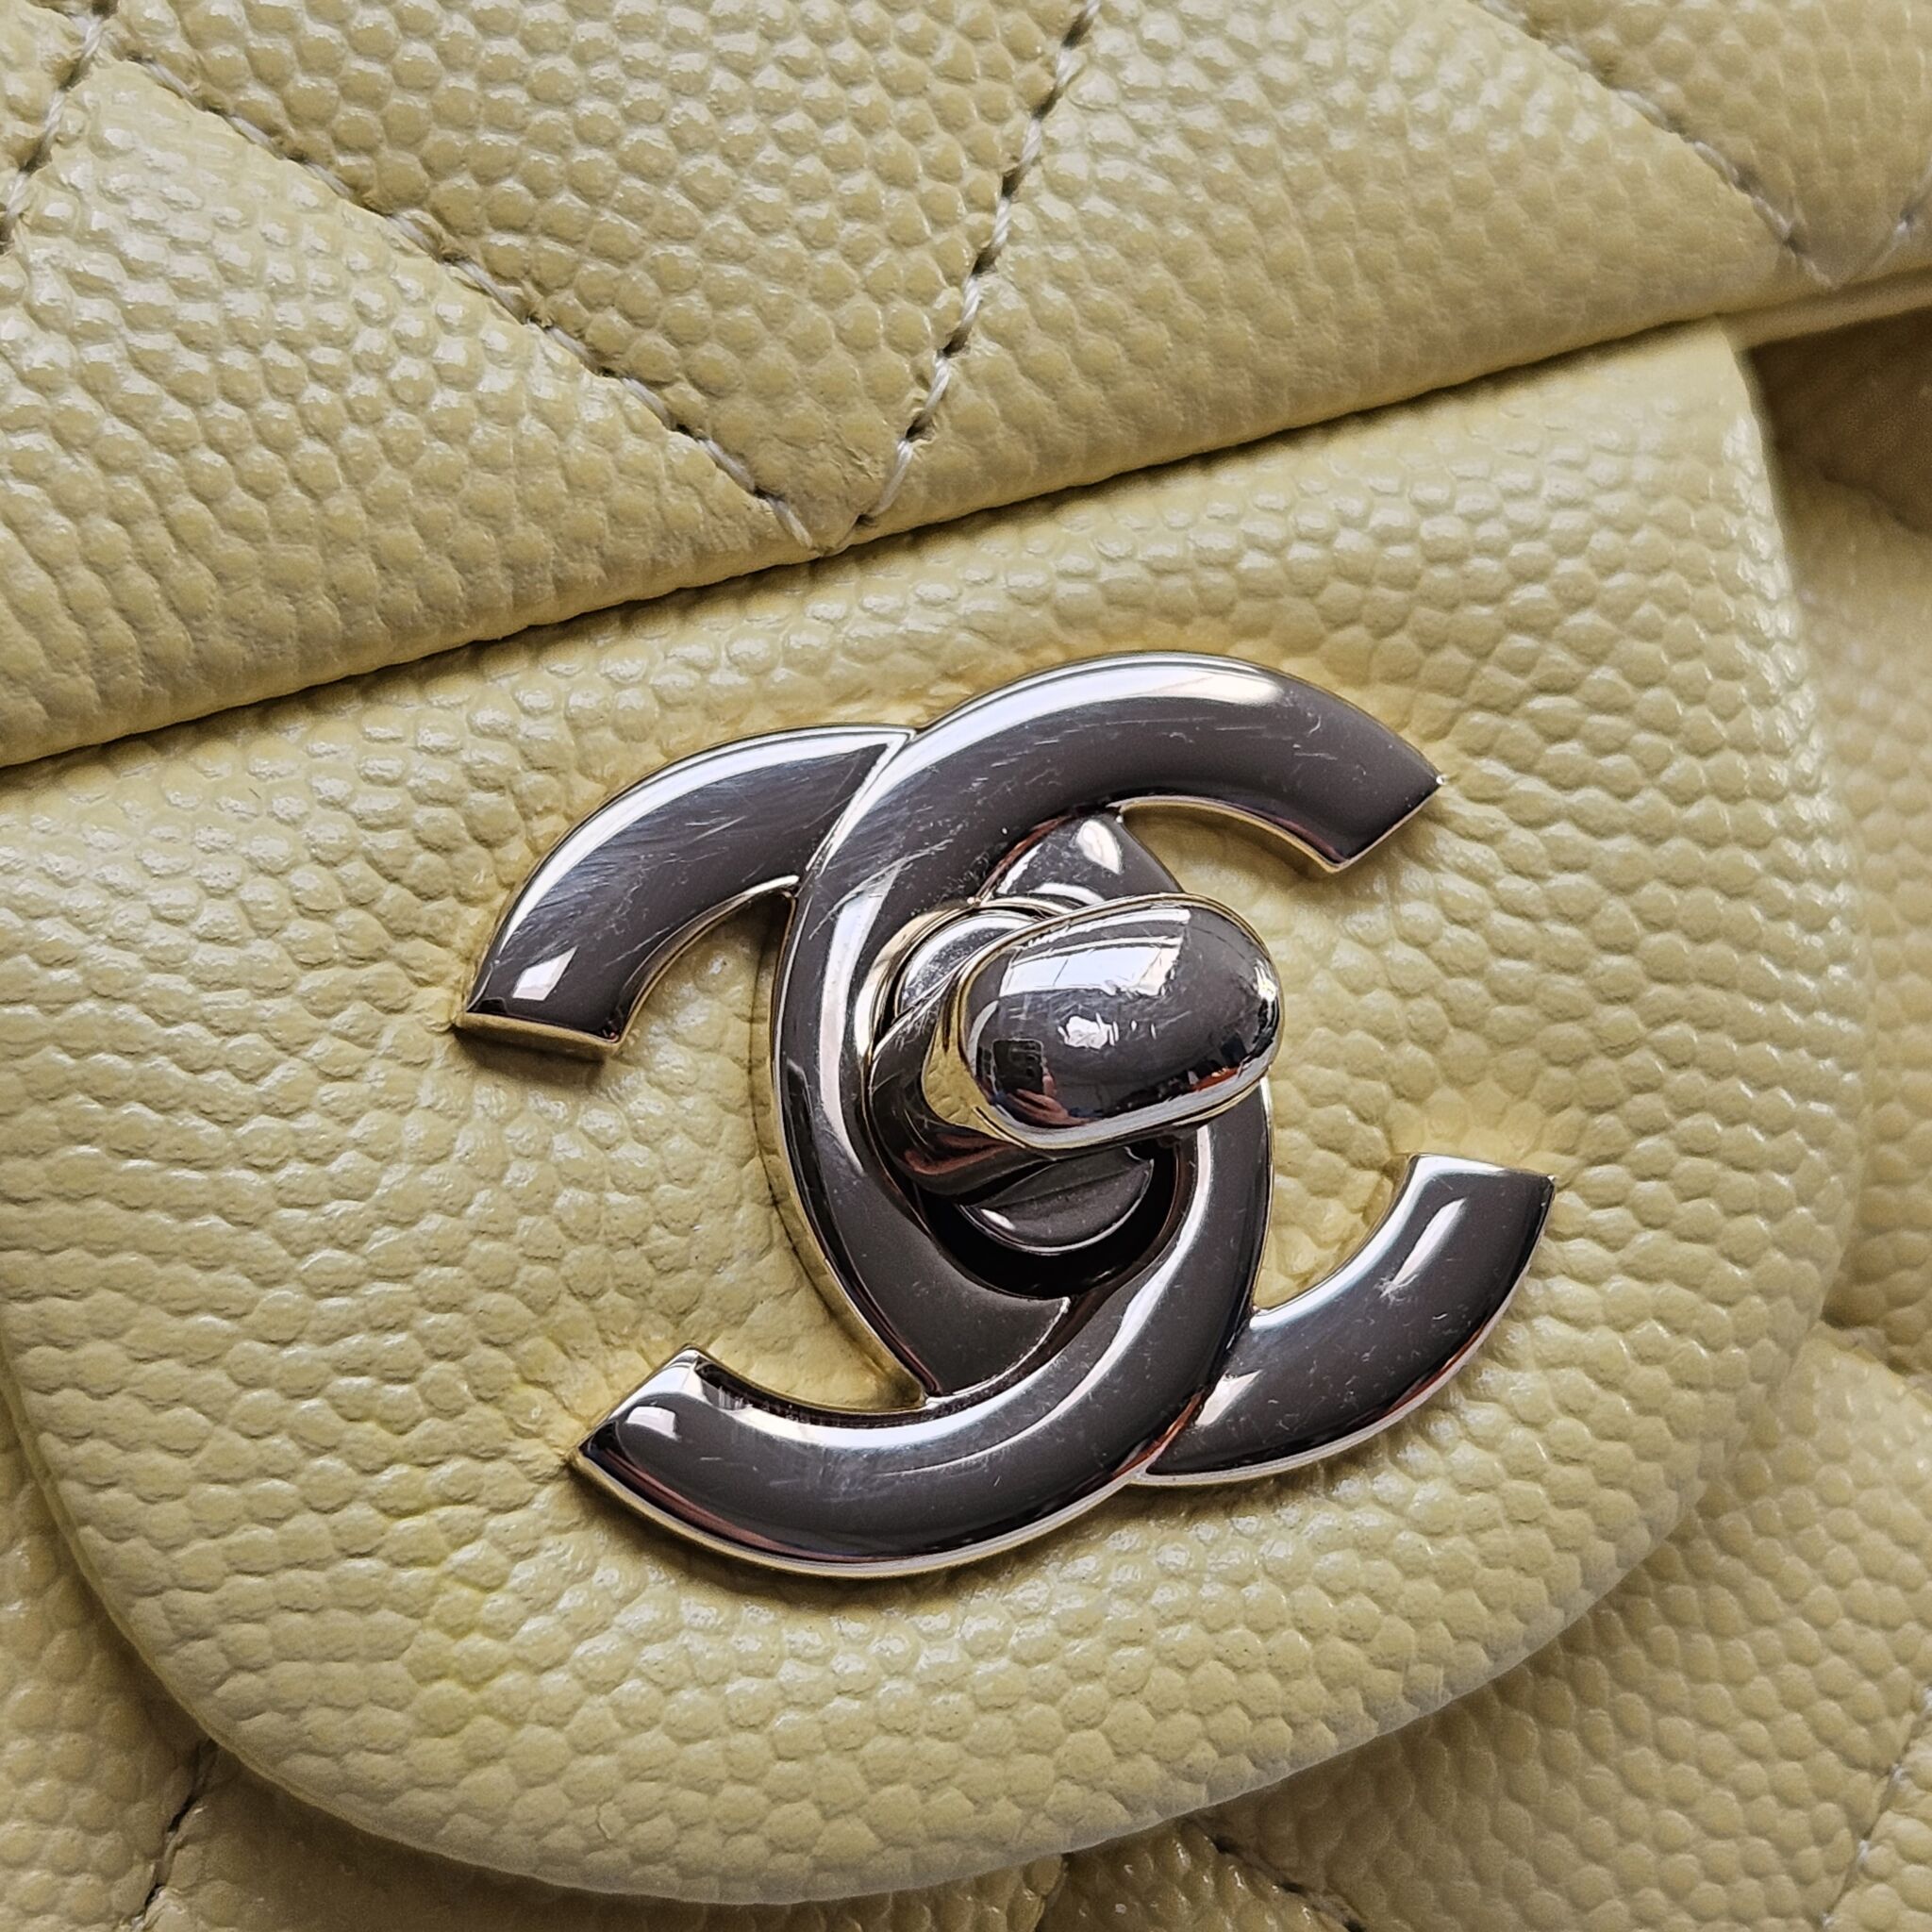 Chanel 21P Medium Classic Flap, Caviar, Light Yellow GHW - Laulay